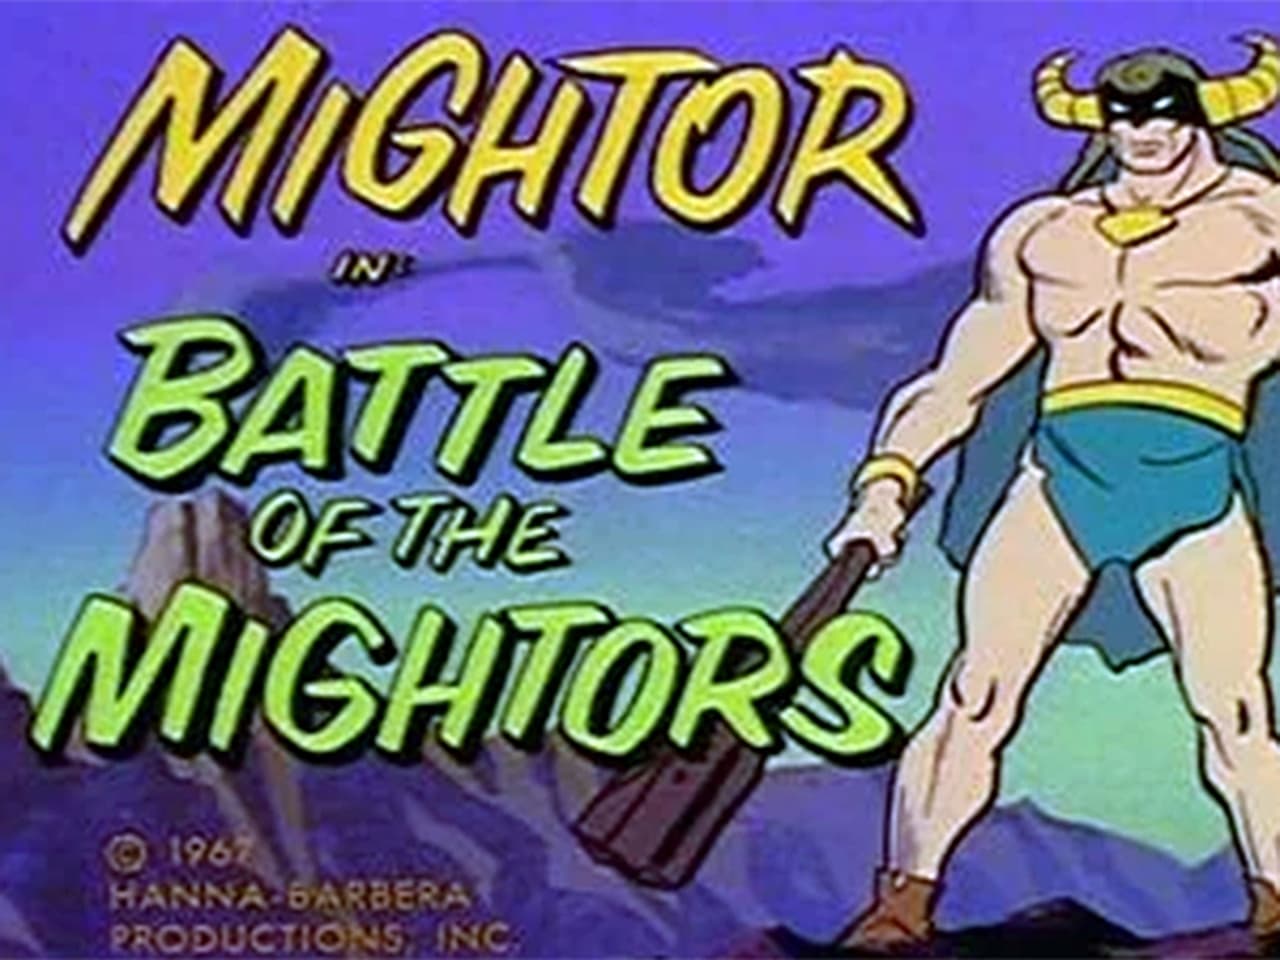 Battle of the Mightors